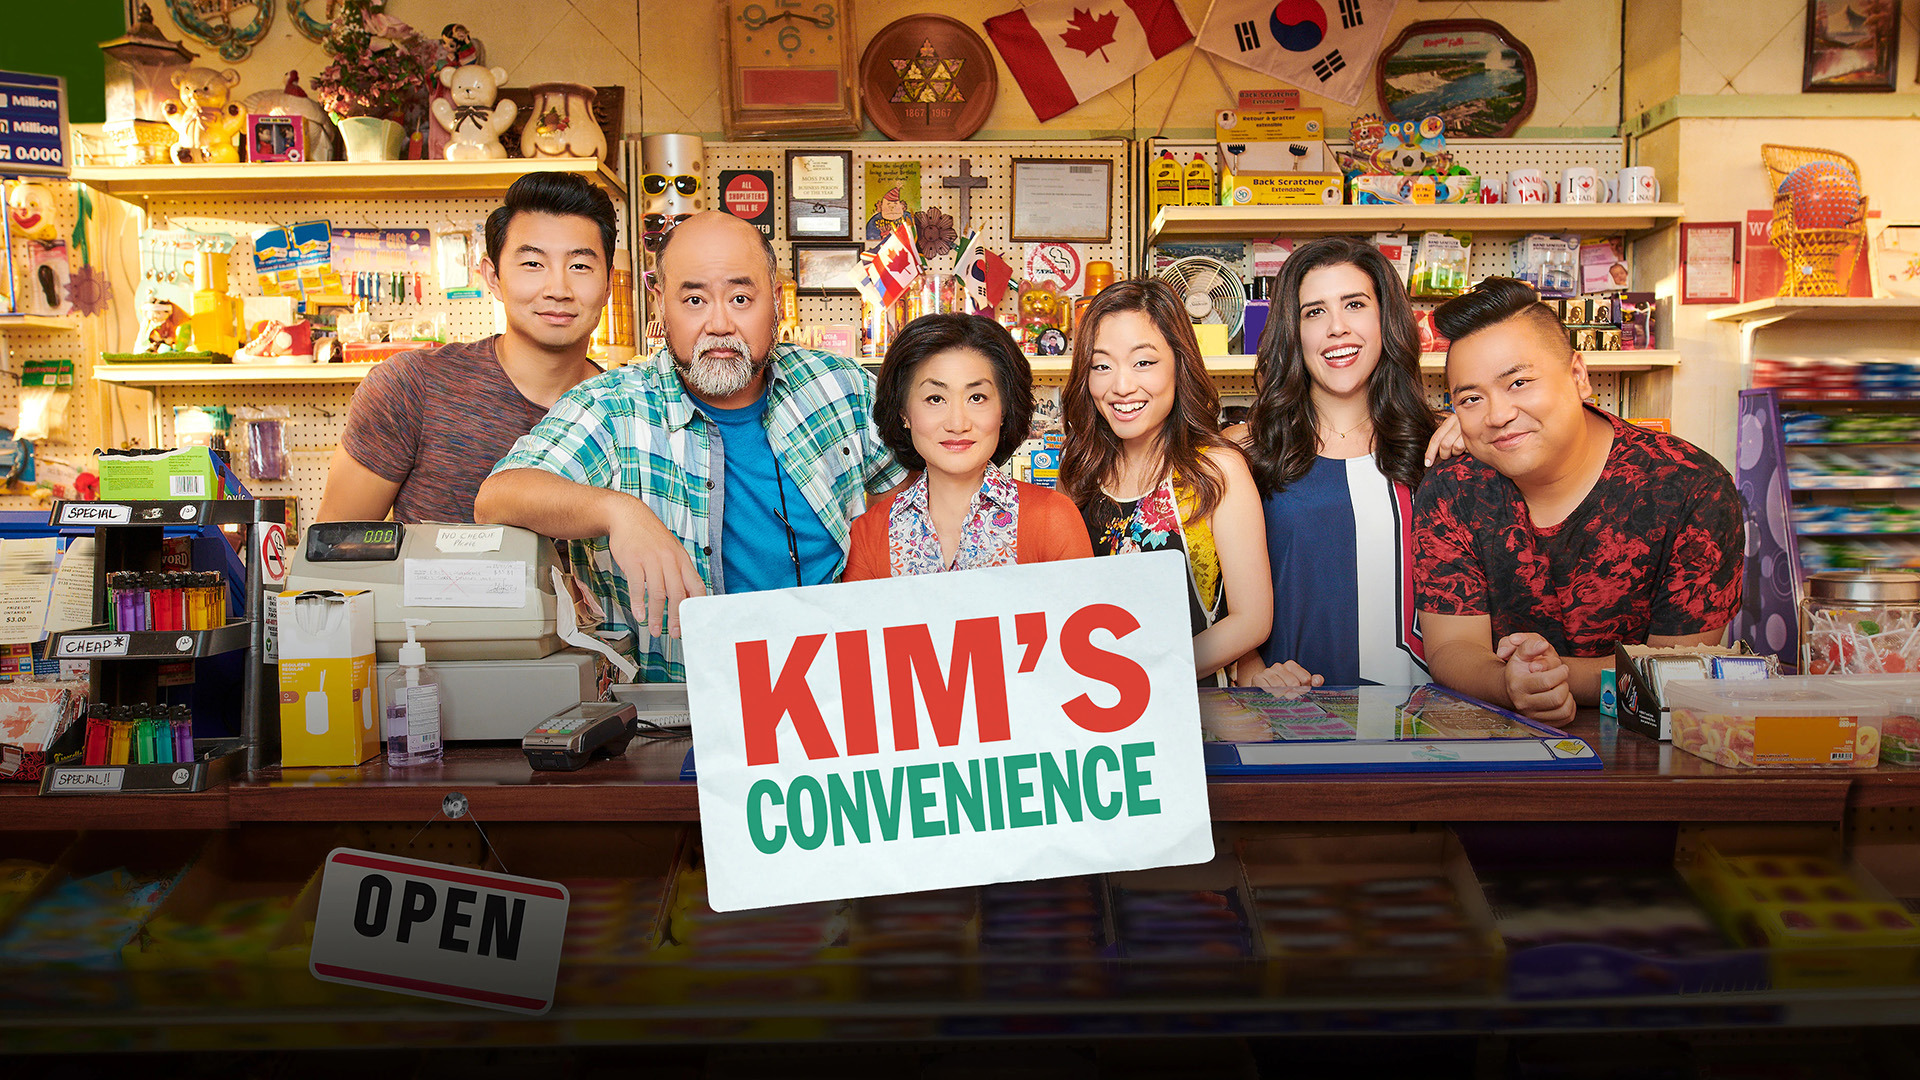 Show Kim's Convenience